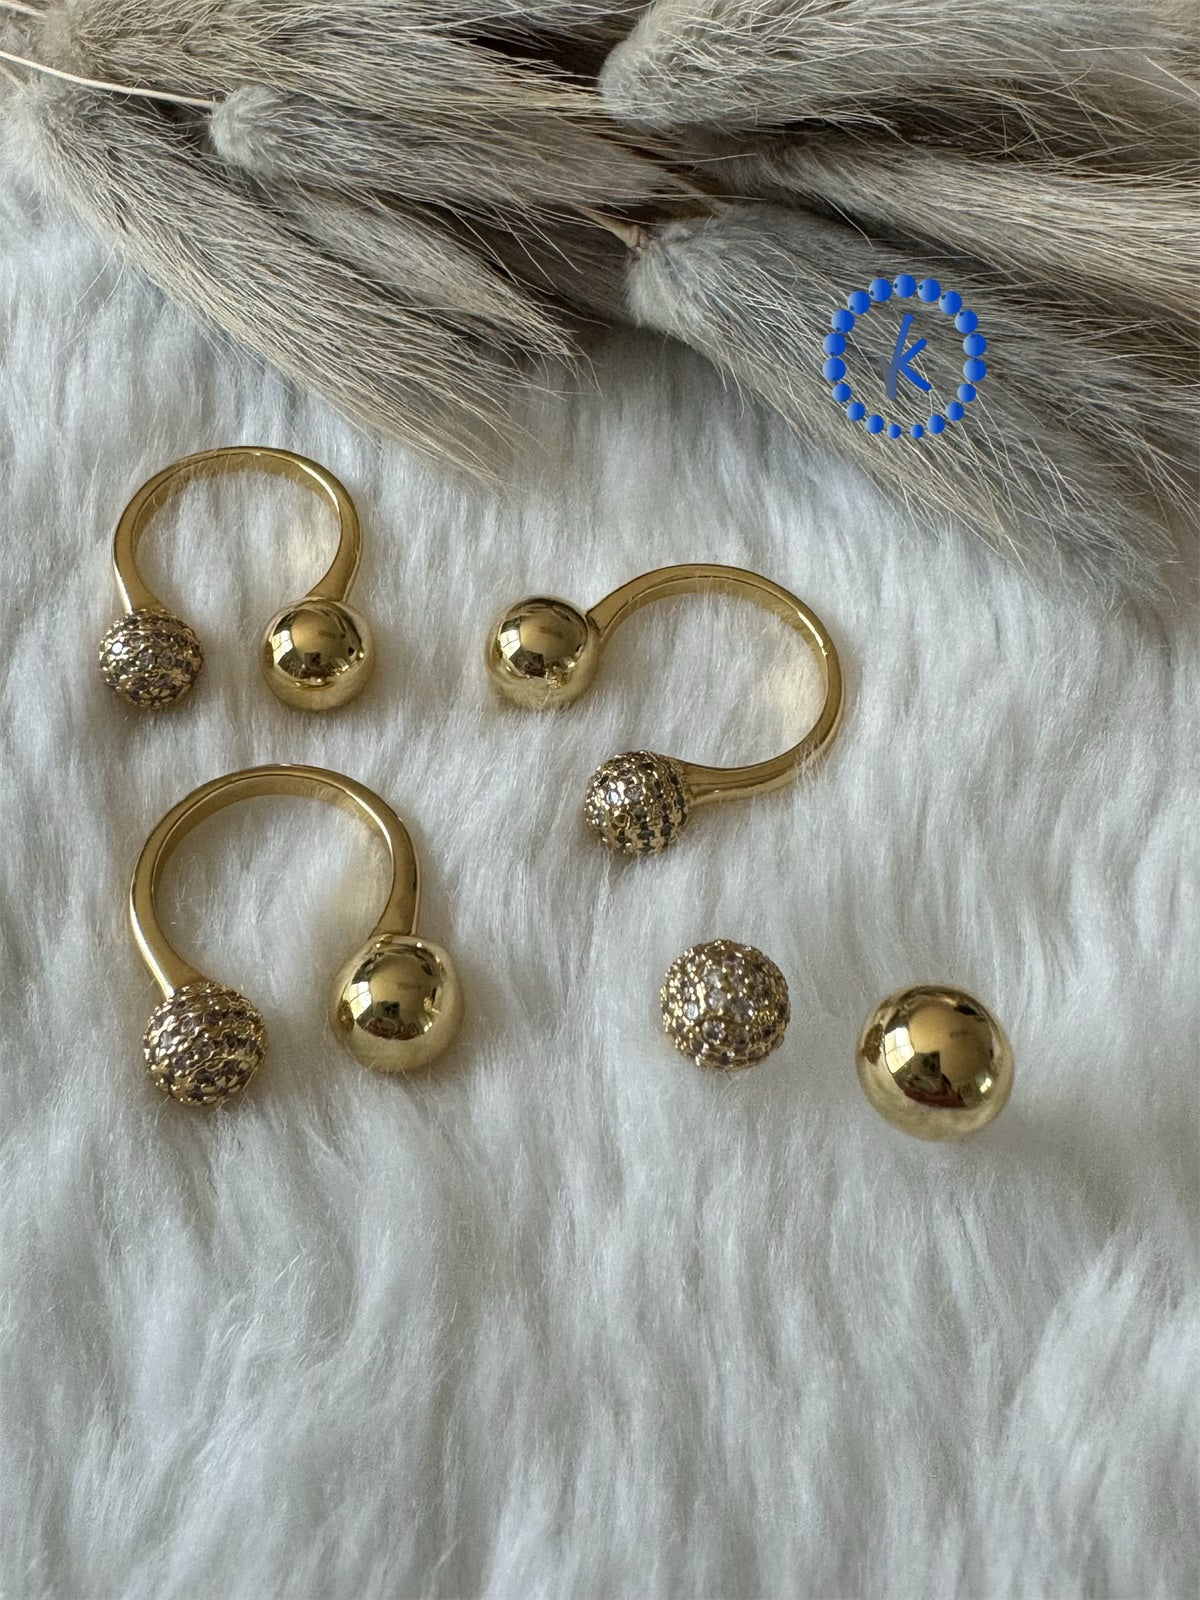 Gorgeous Zirconia Rings of 2 Round Beads